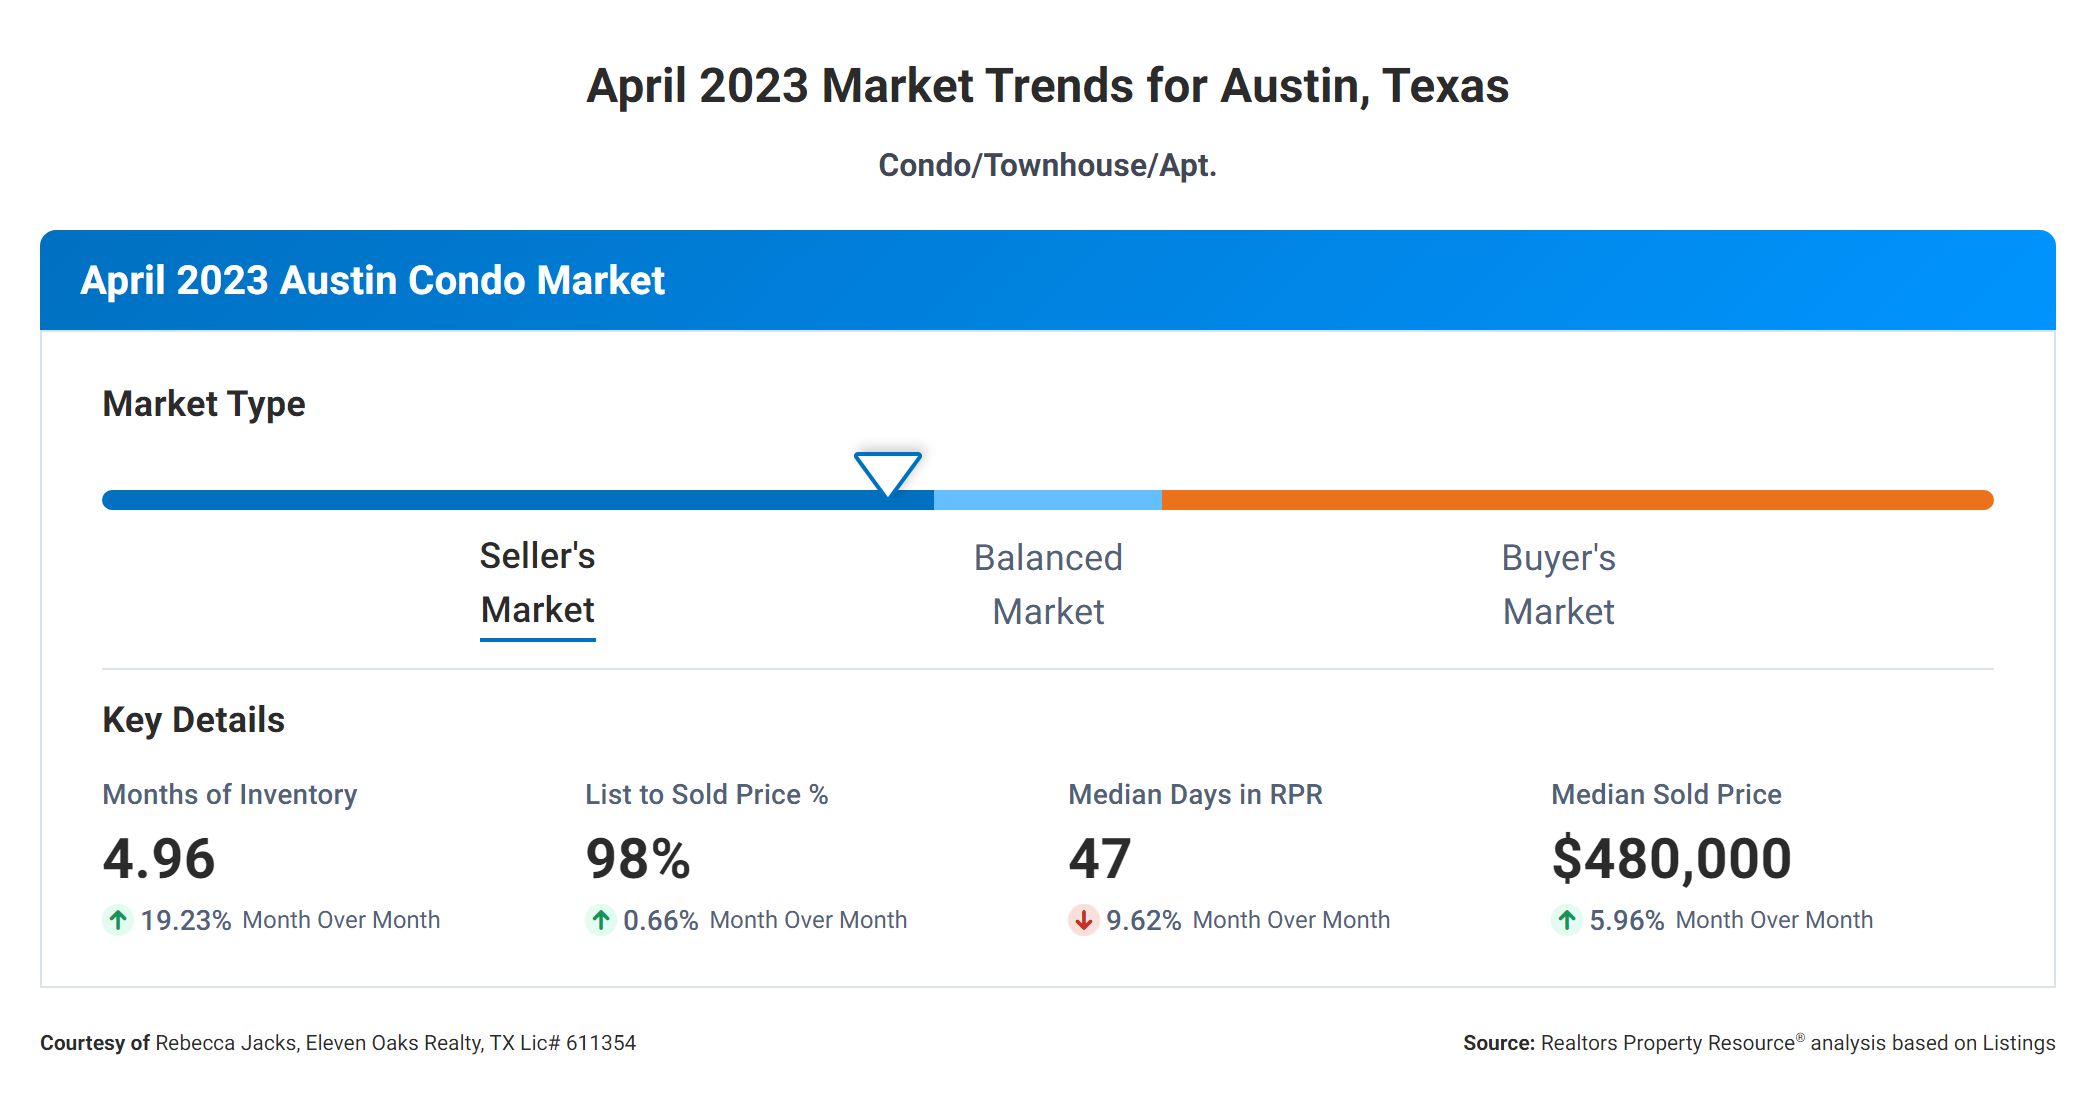 April 2023 Austin condo market trends